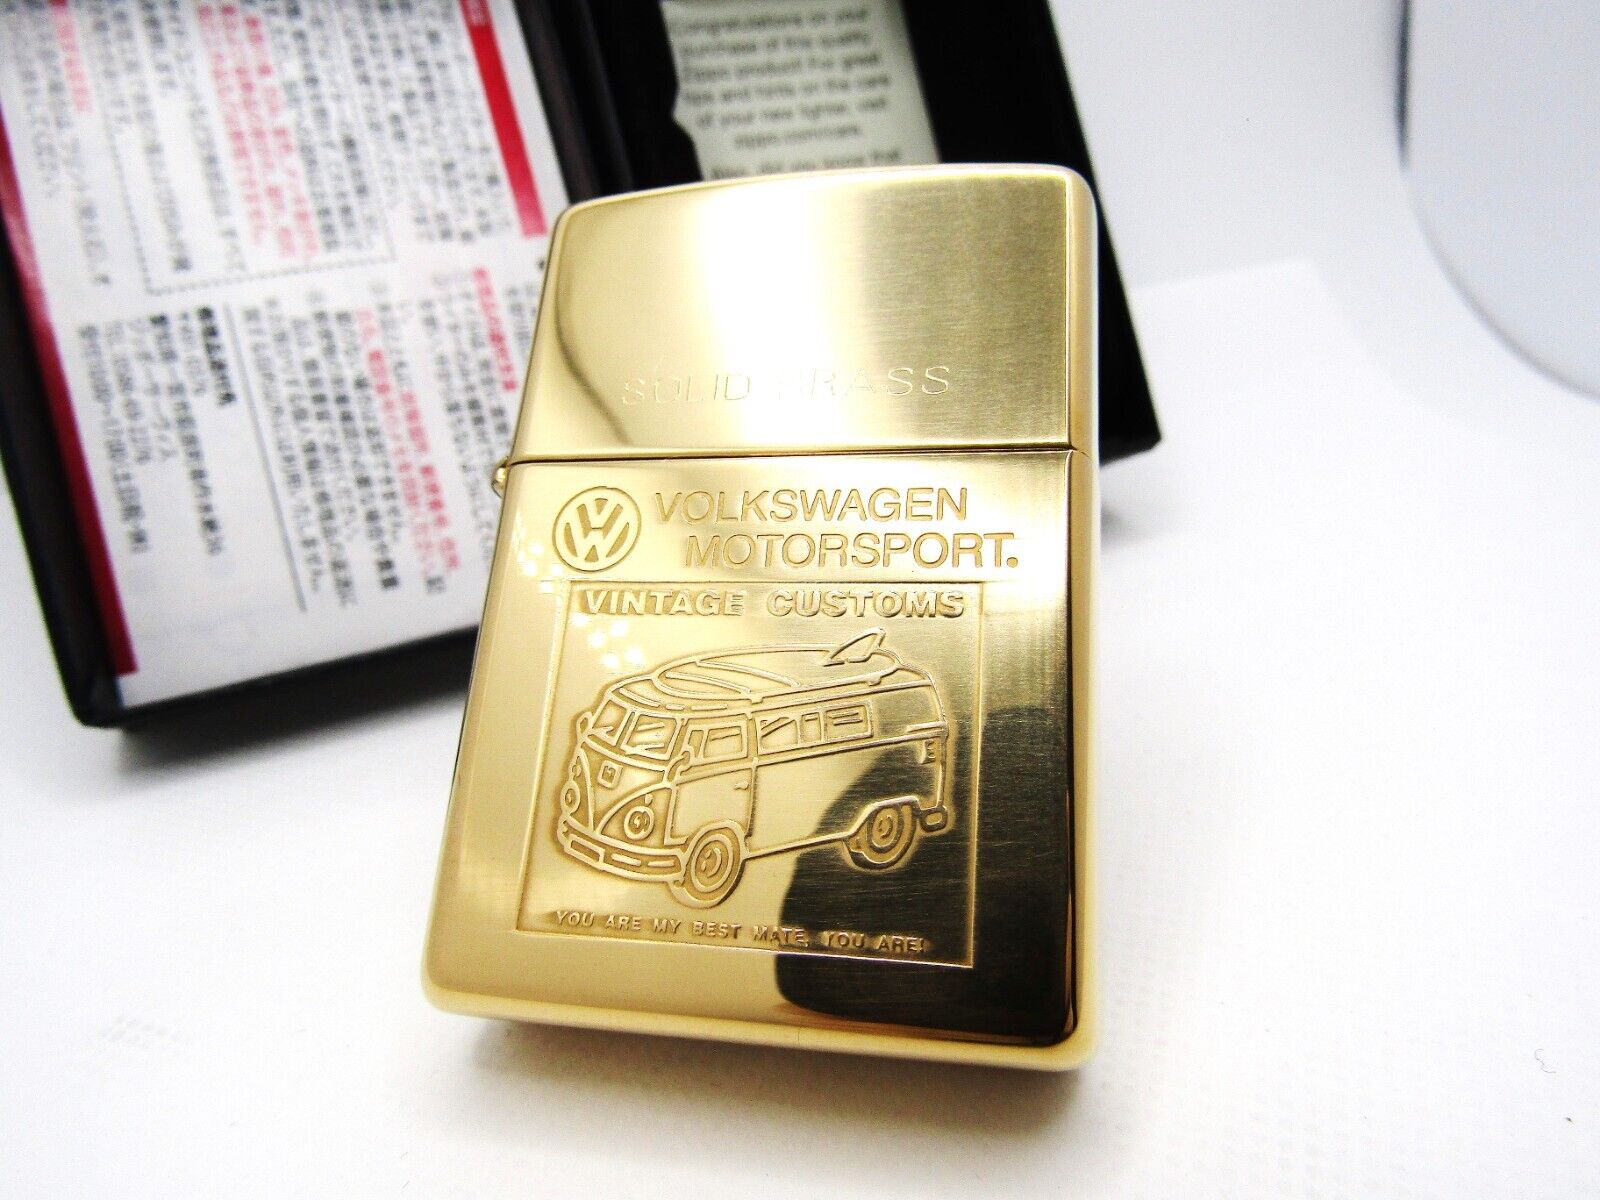 Volkswagen Motorsport Engraved Solid Brass Zippo 1997 Unfired Rare